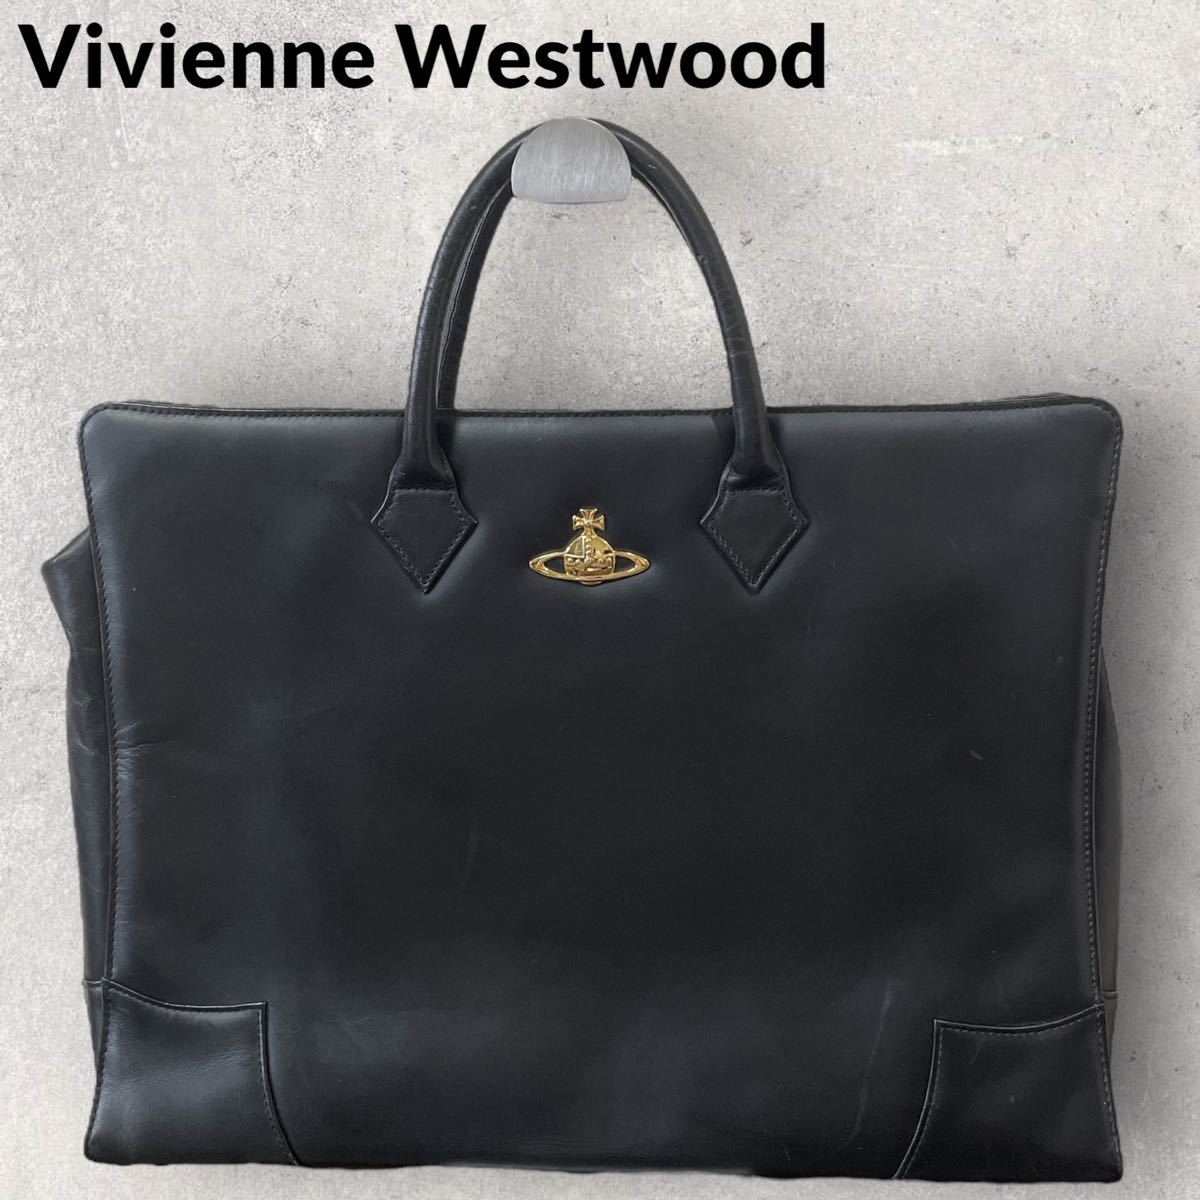 Viviennd Westwood オーブ オールレザーブリーフケース ブラック ビジネスバッグ